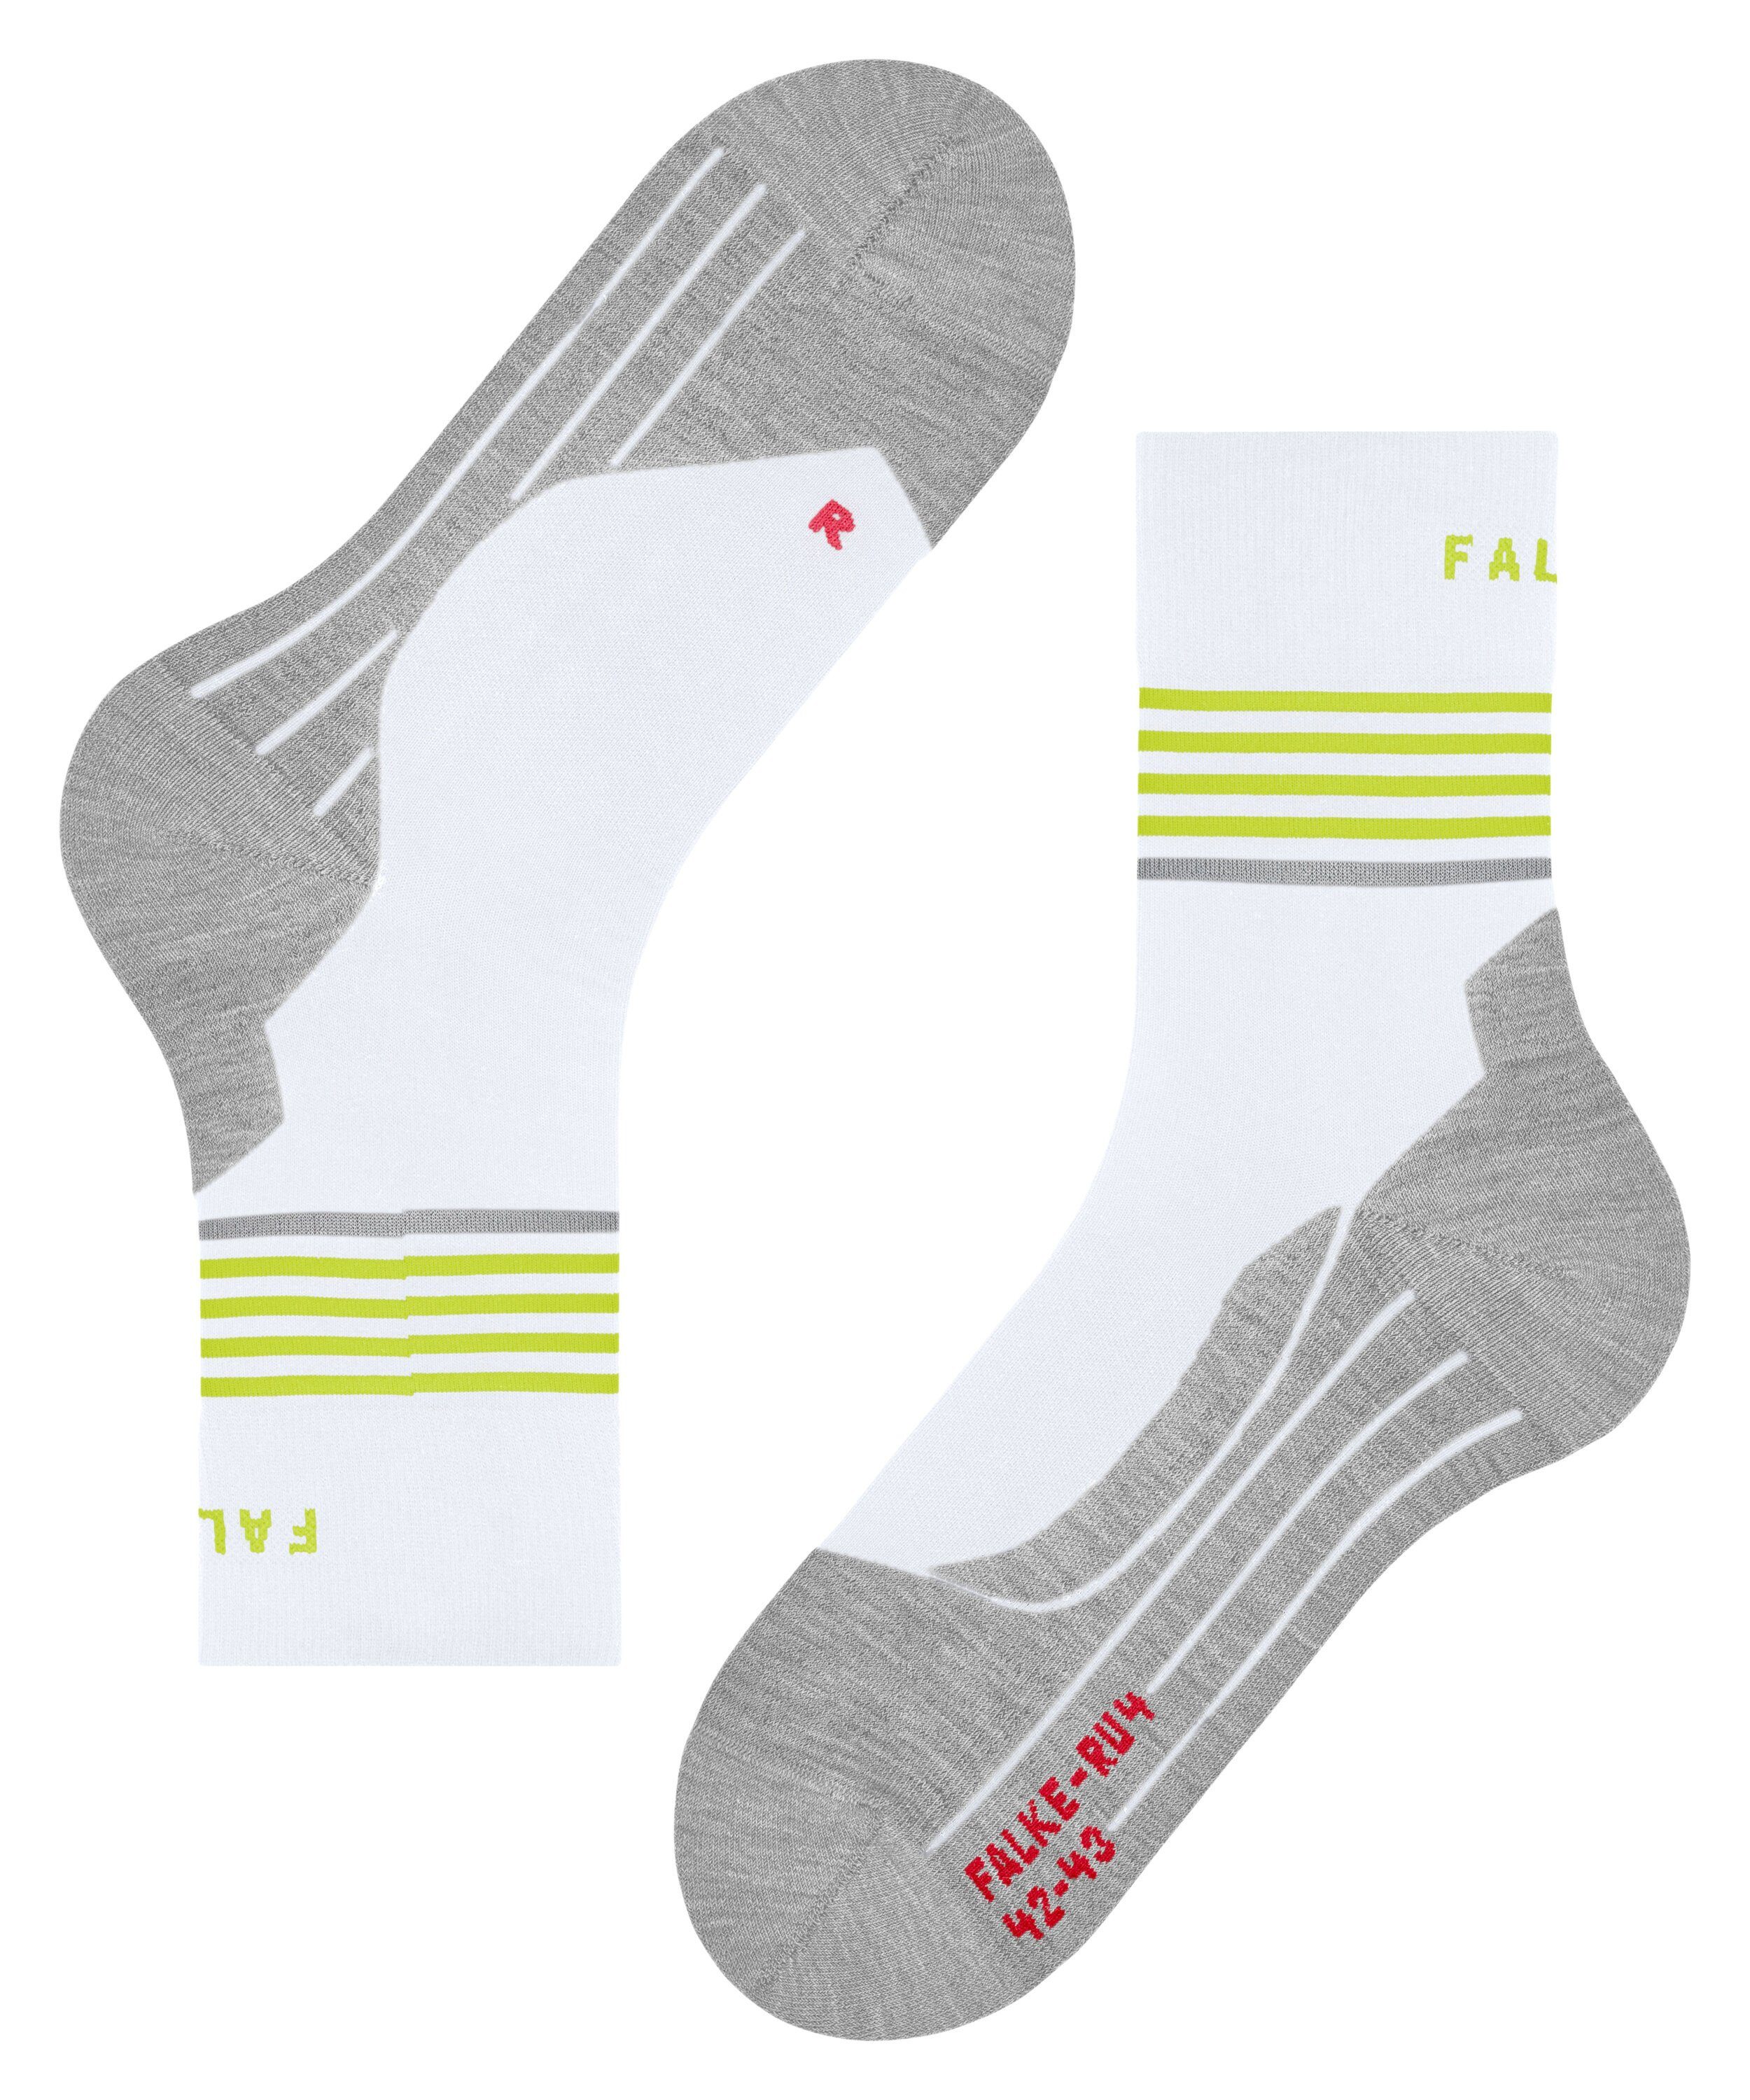 mittlerer Laufsocke Endurance RU4 Reflect white FALKE (1-Paar) leichte Laufsocken Polsterung (2007) mit